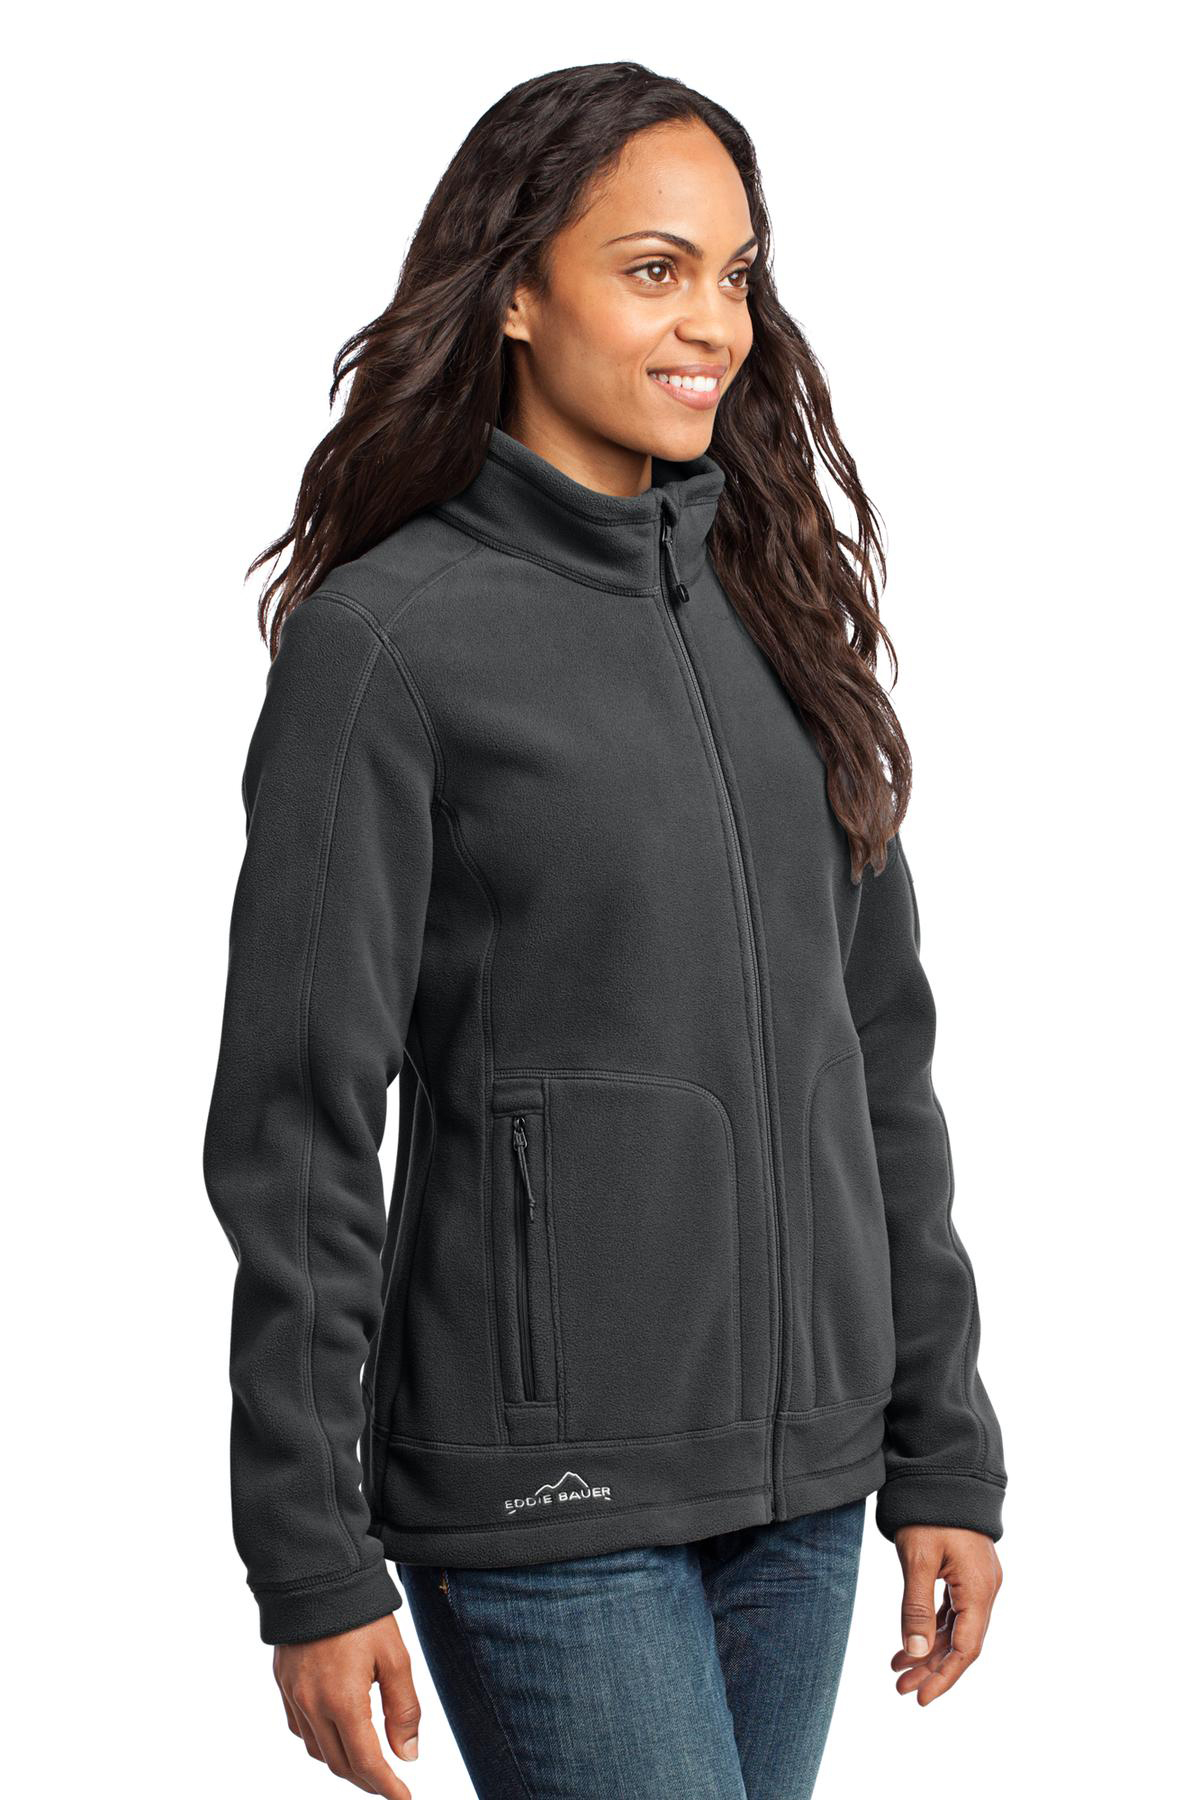 Eddie Bauer - Ladies Wind-Resistant Full-Zip Fleece Jacket | Product ...